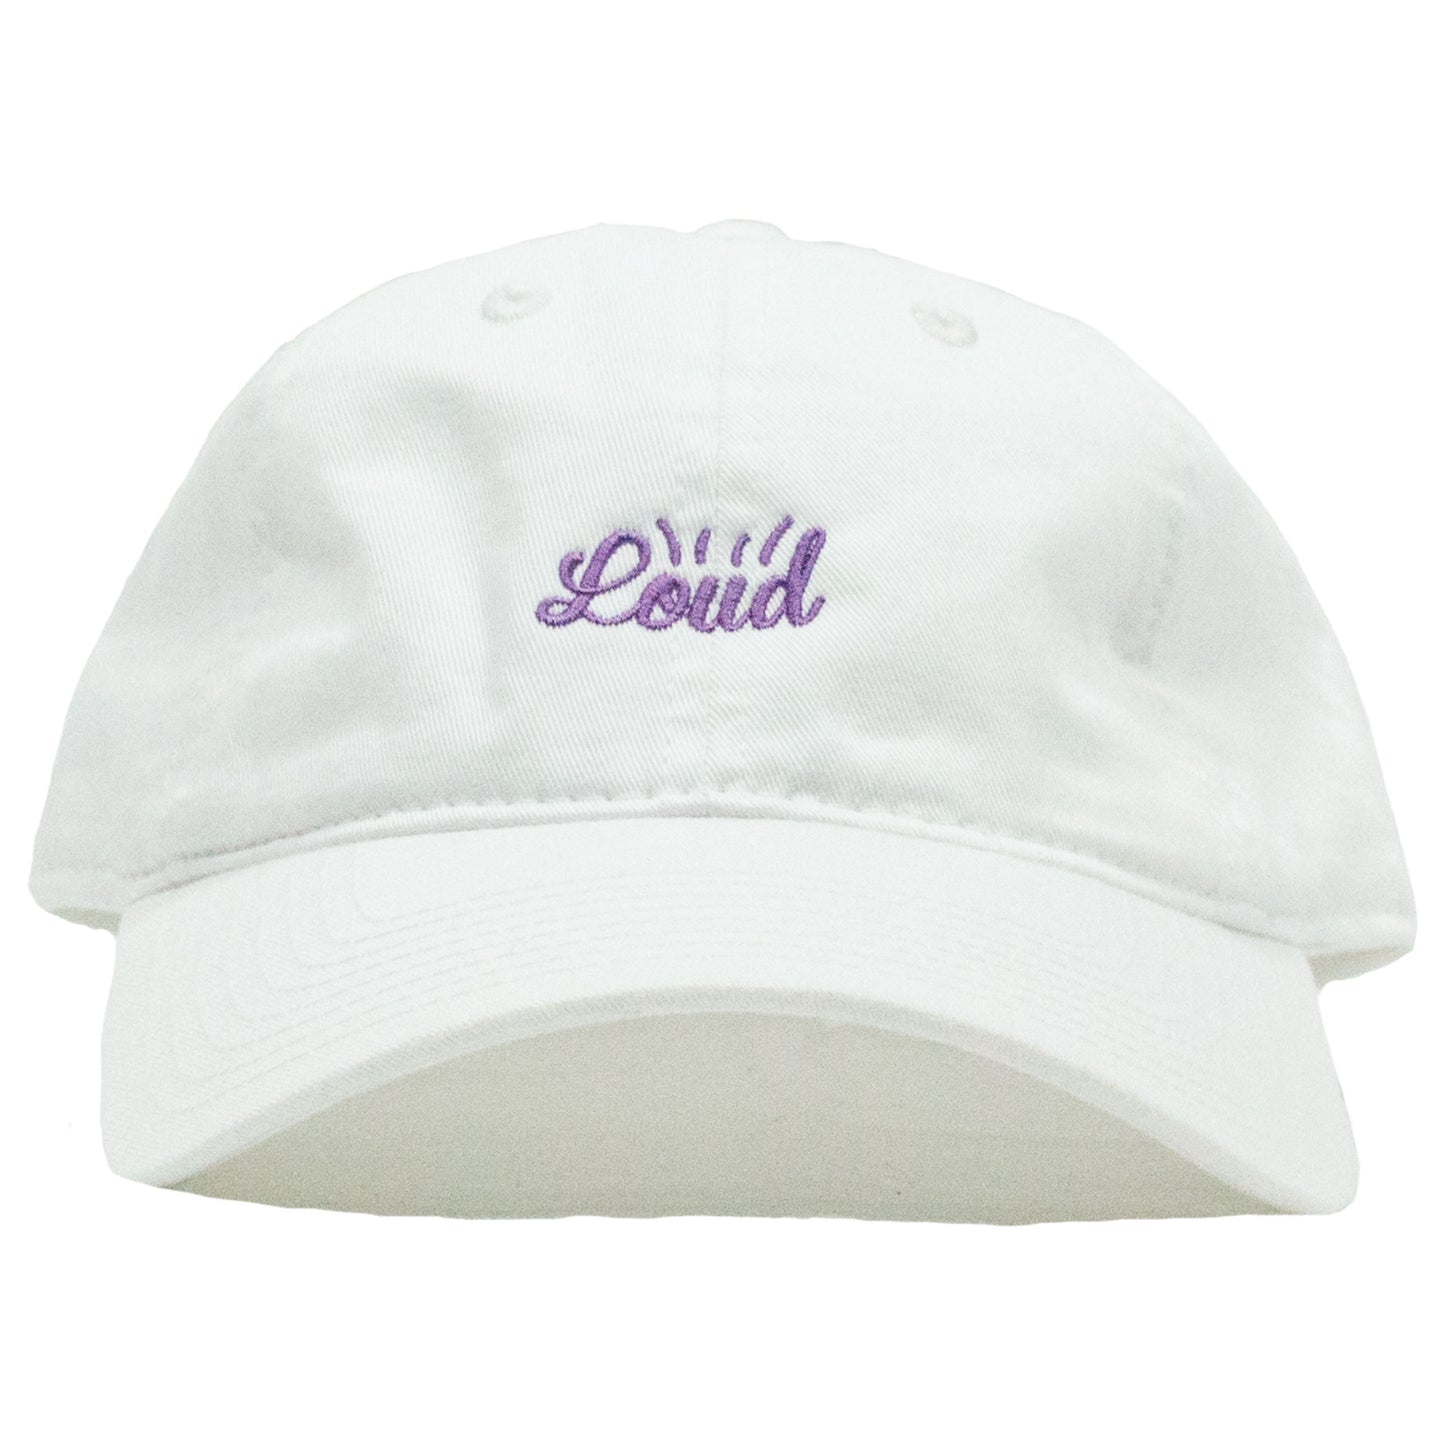 Loud Hat - White/Purp